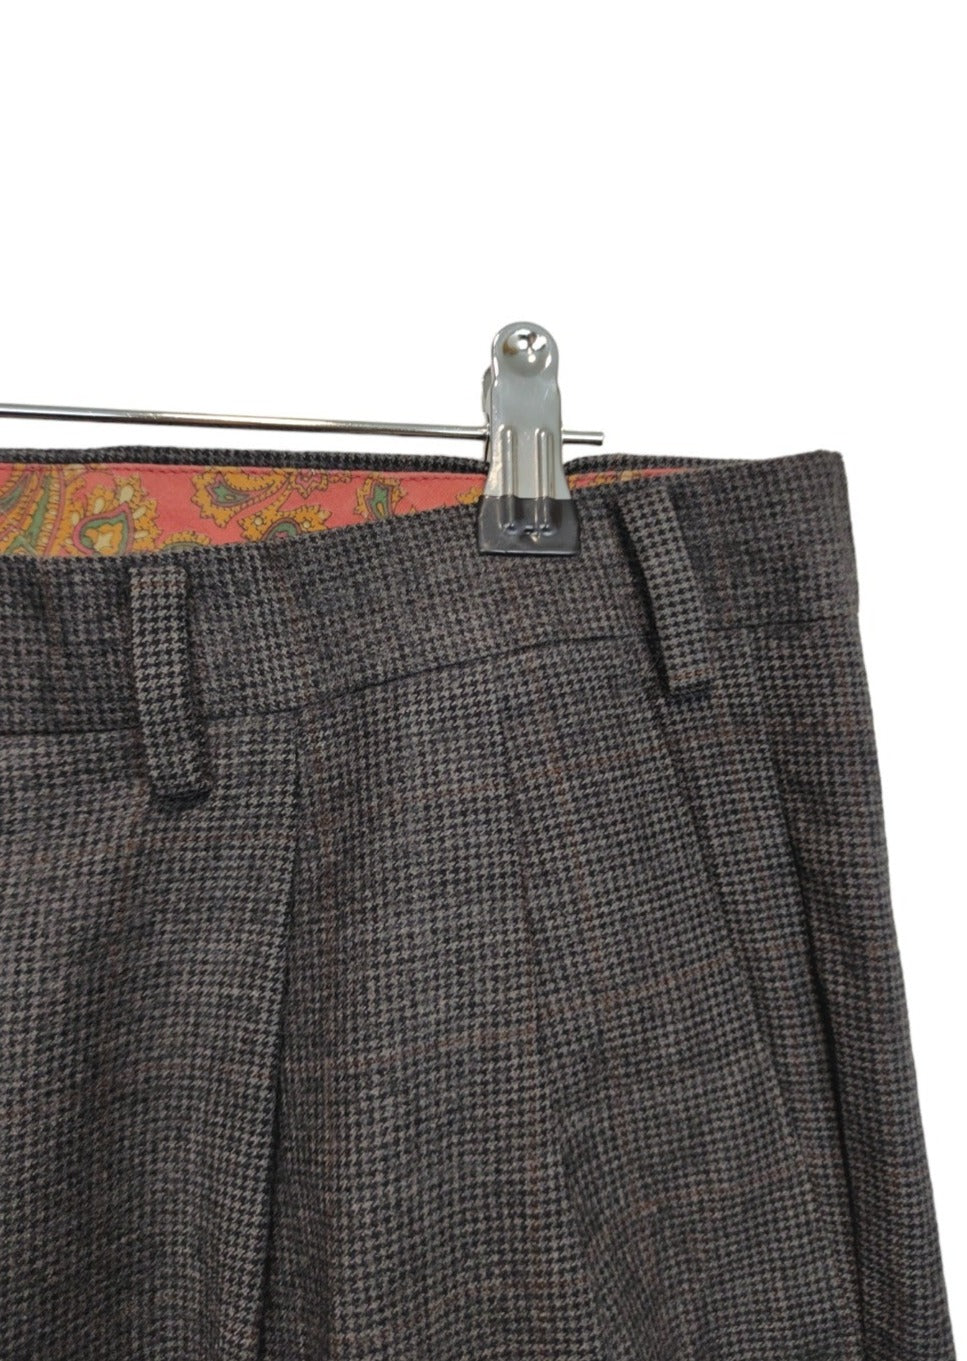 Vintage, Μάλλινο Aνδρικό Παντελόνι RALPH LAUREN σε Γκρι-Καφέ χρώμα (No 36)